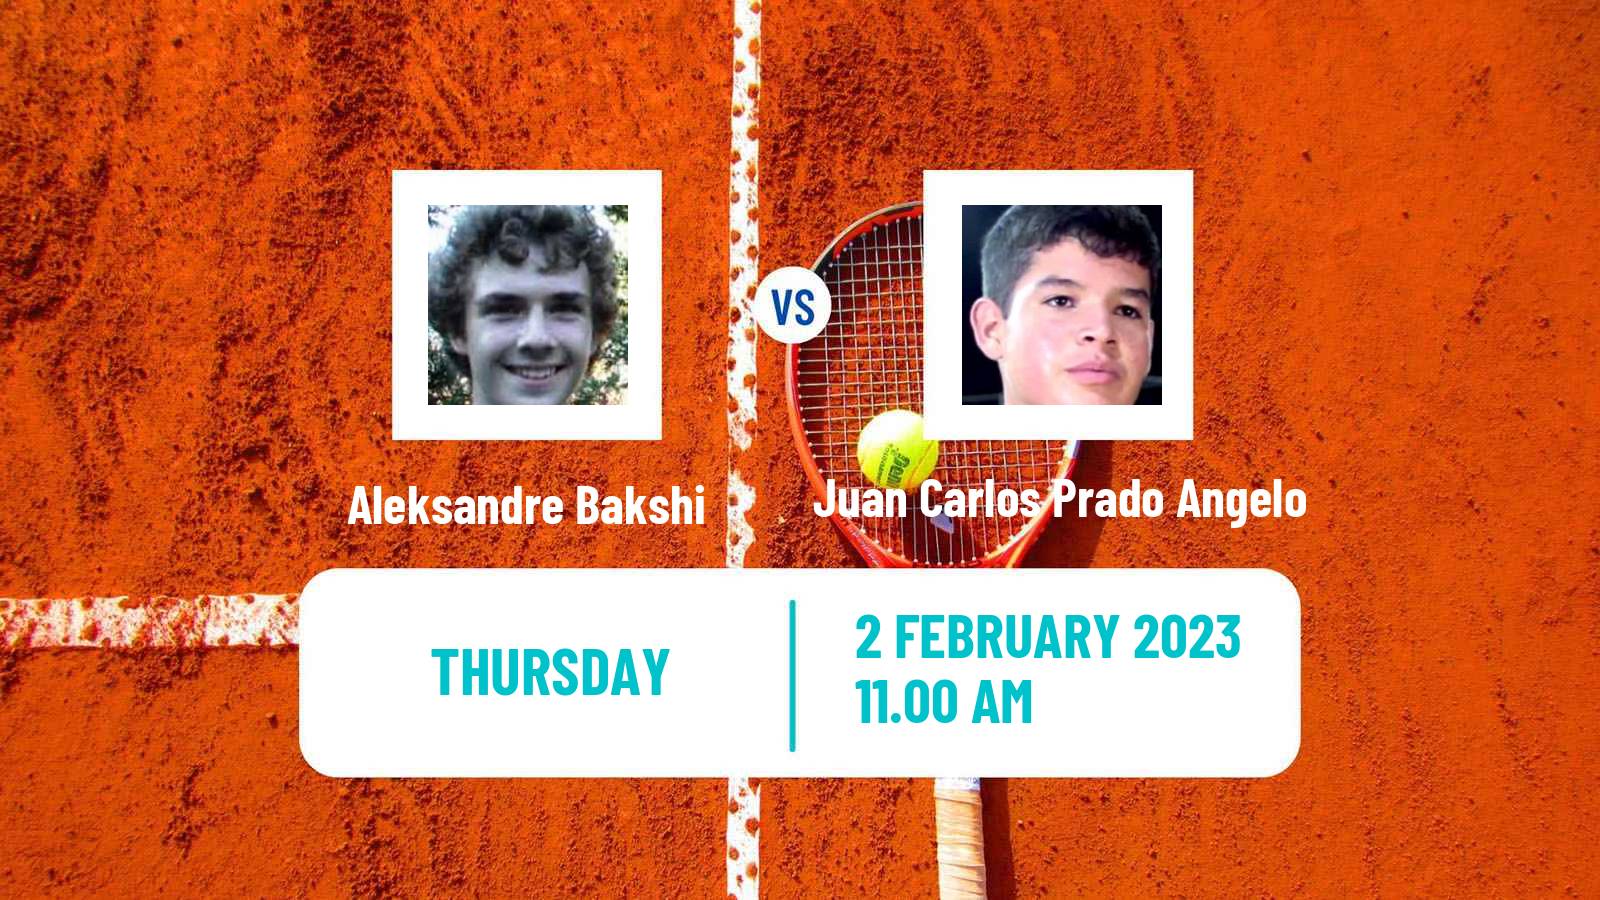 Tennis Davis Cup World Group II Aleksandre Bakshi - Juan Carlos Prado Angelo